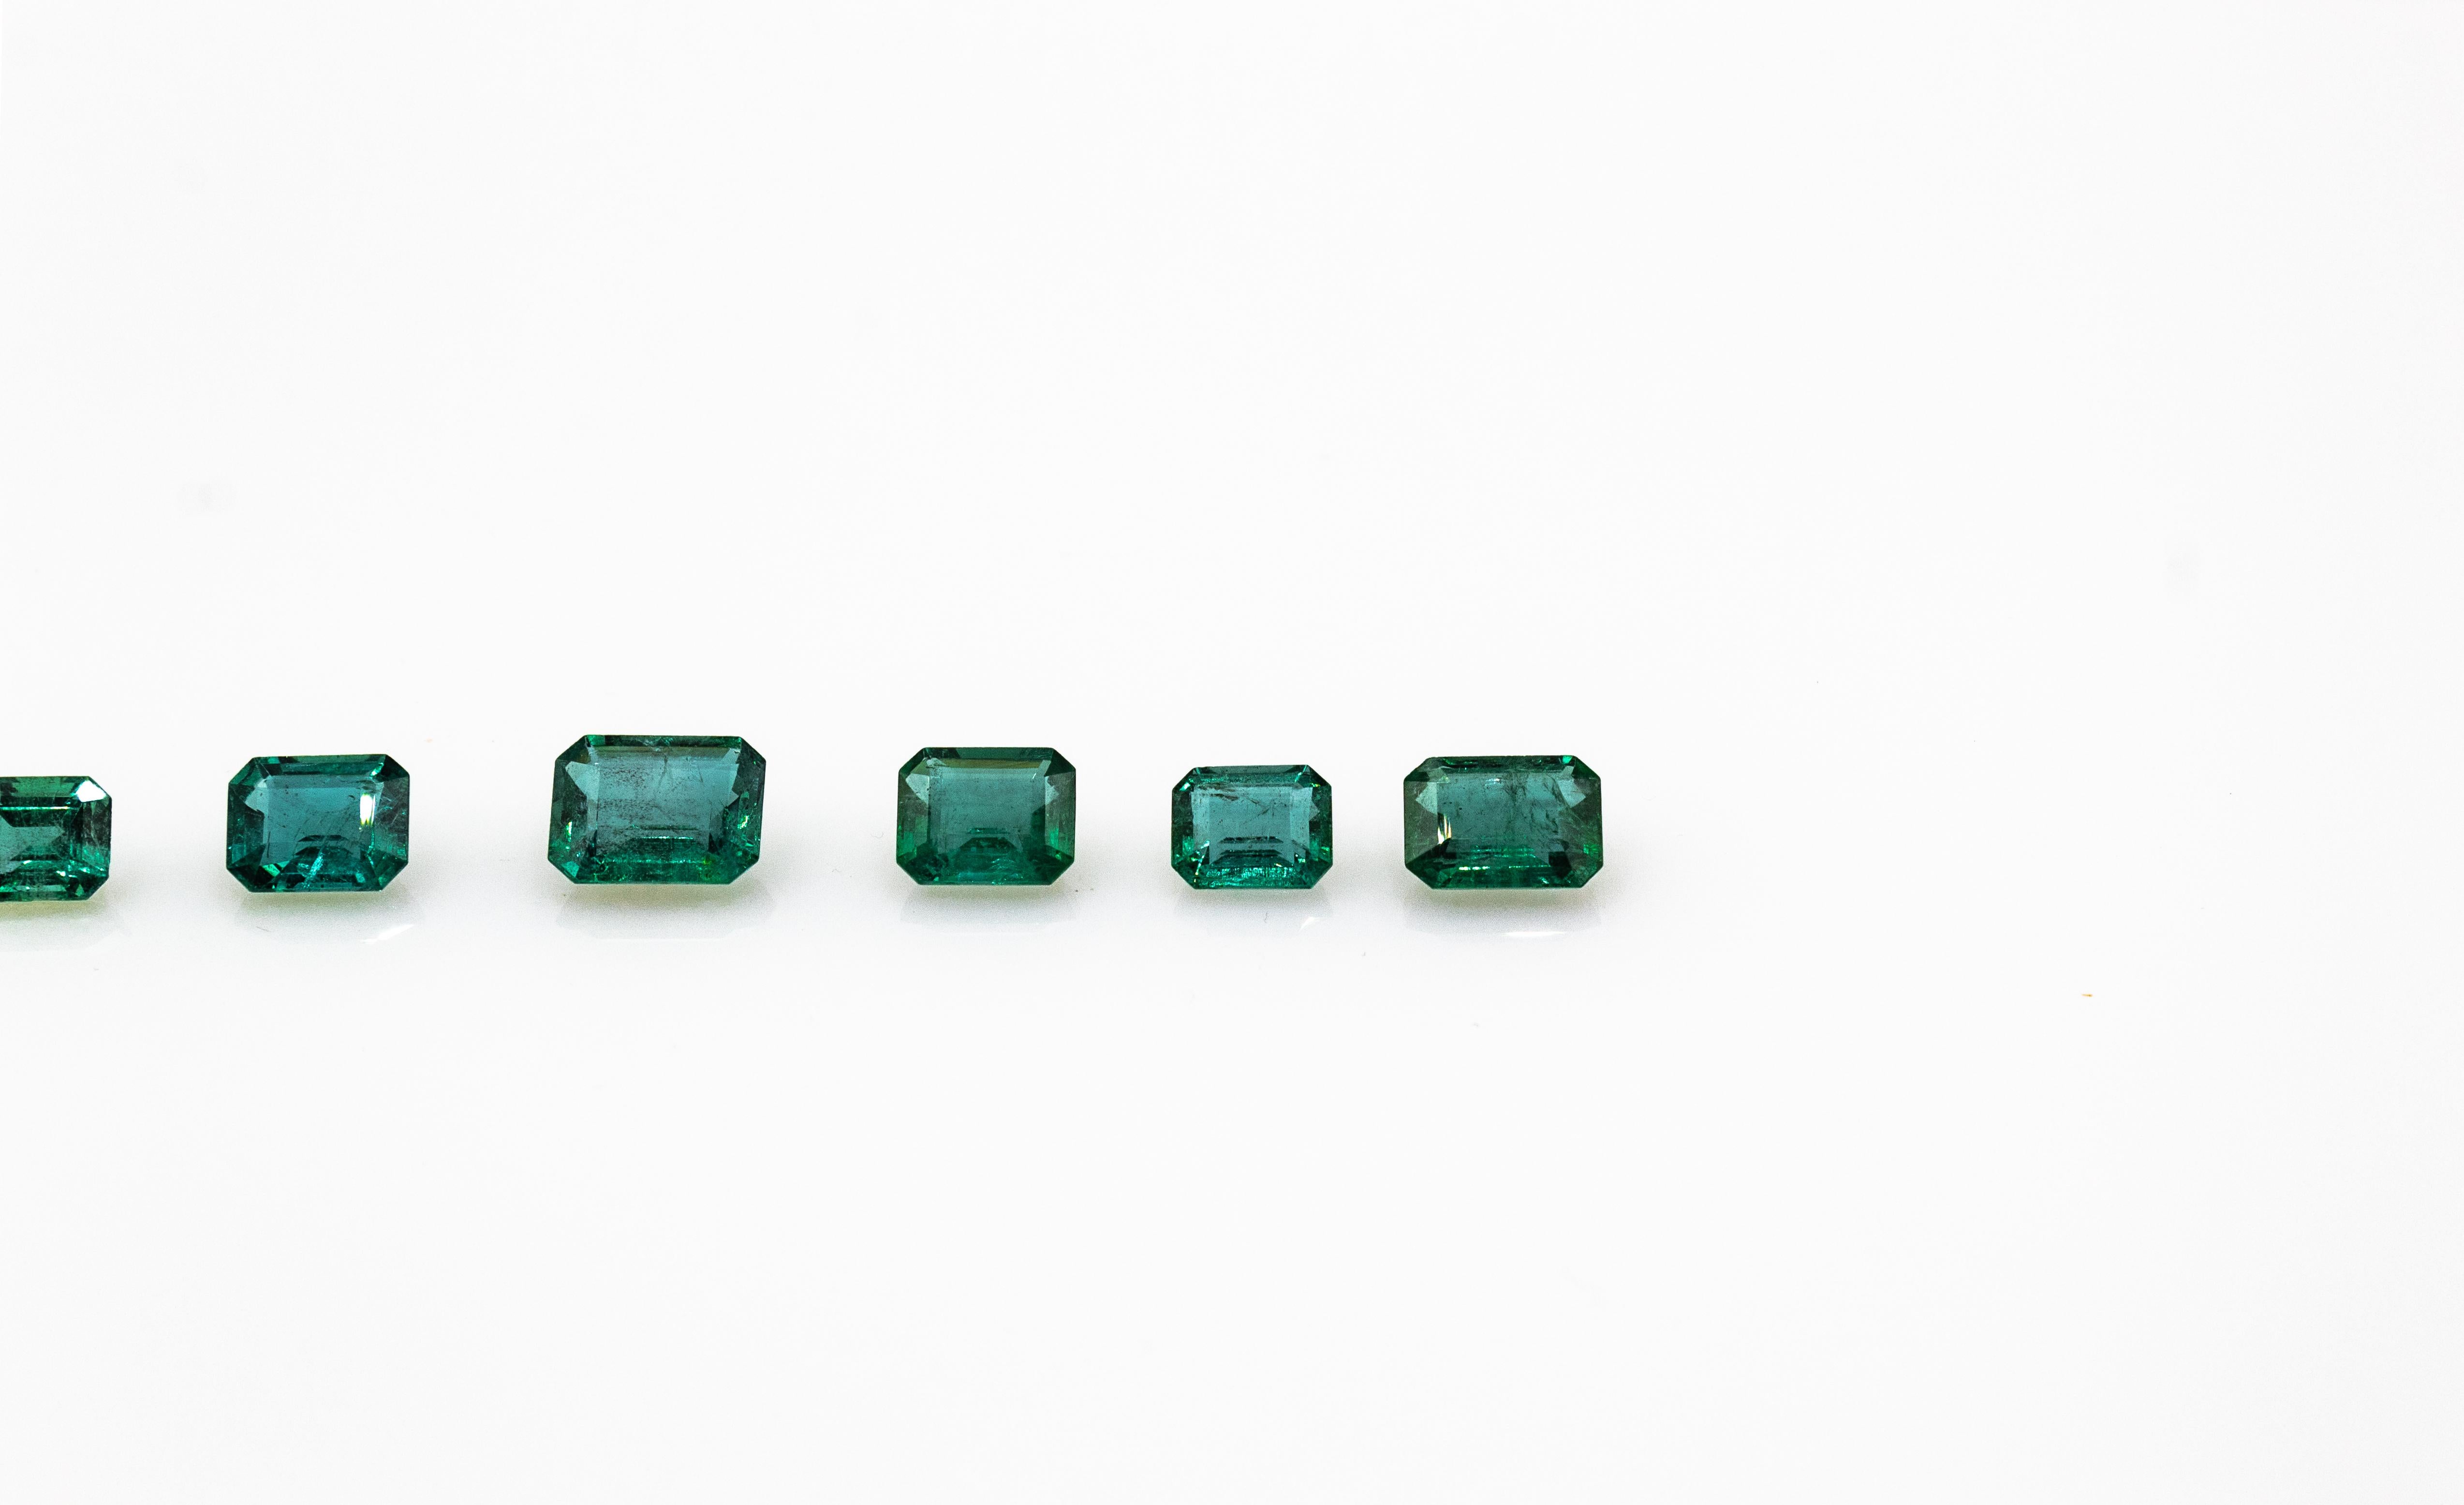 Certifiable Zambia Octagon Cut 2.98 Carat Emerald Loose Gemstone 3